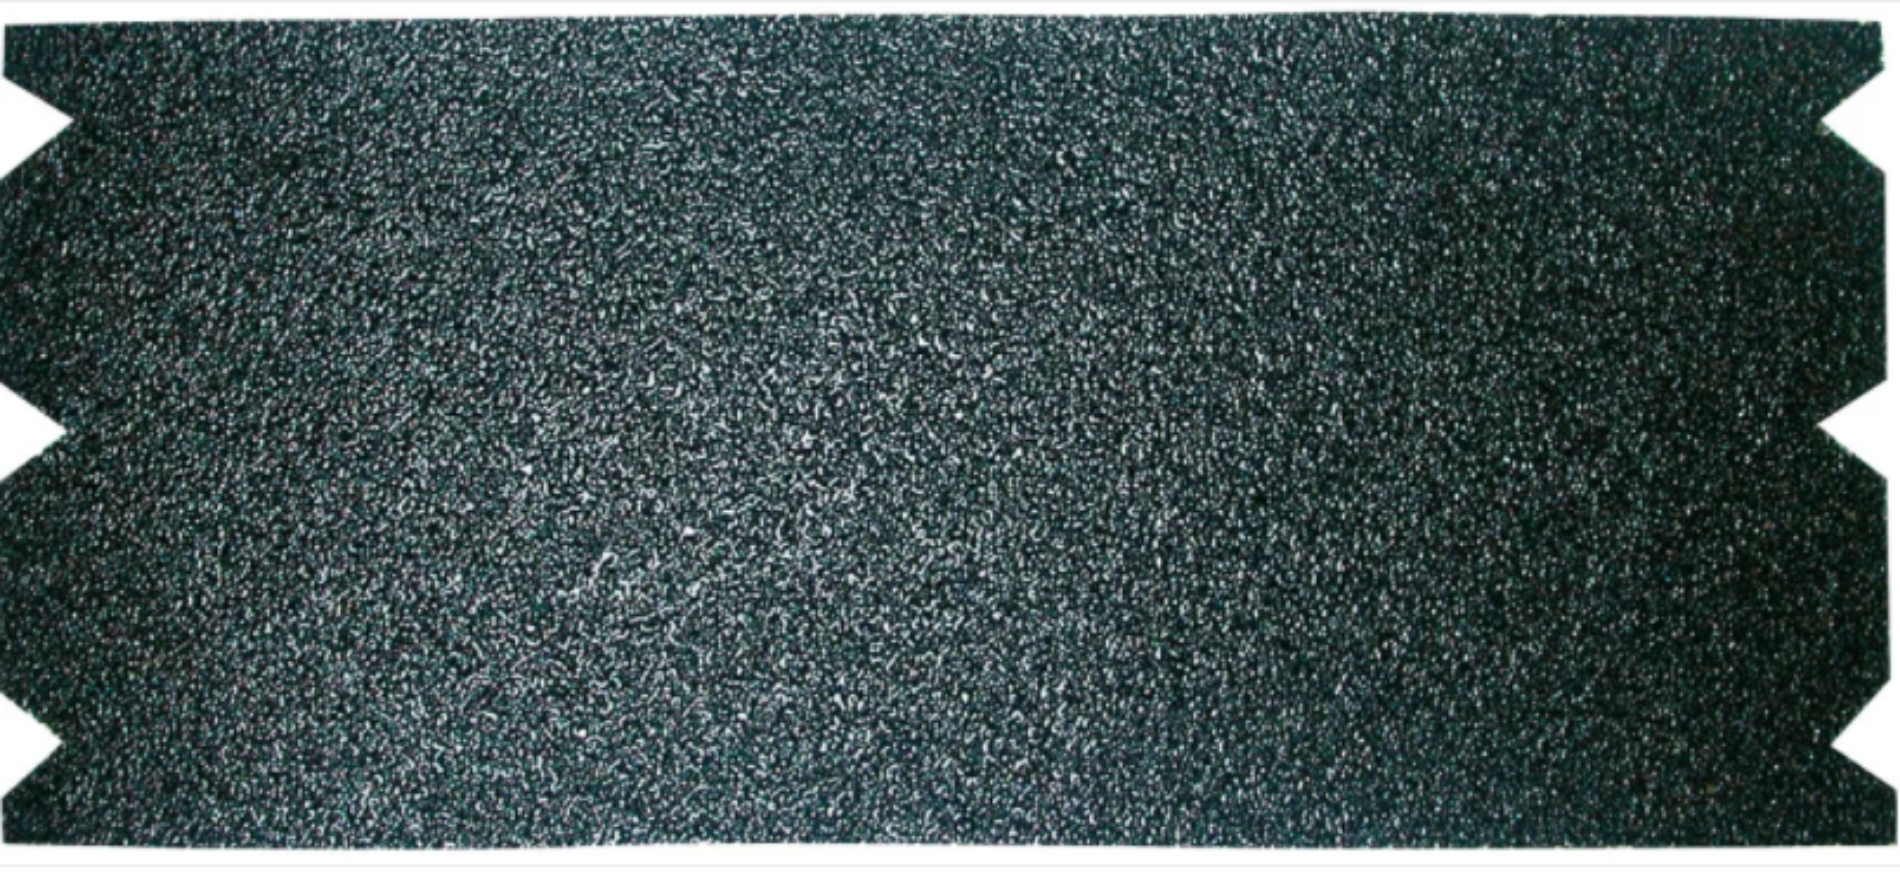 Picture of Makita Abrasive Floor Sander Sheet 40G (203mm x 476mm)